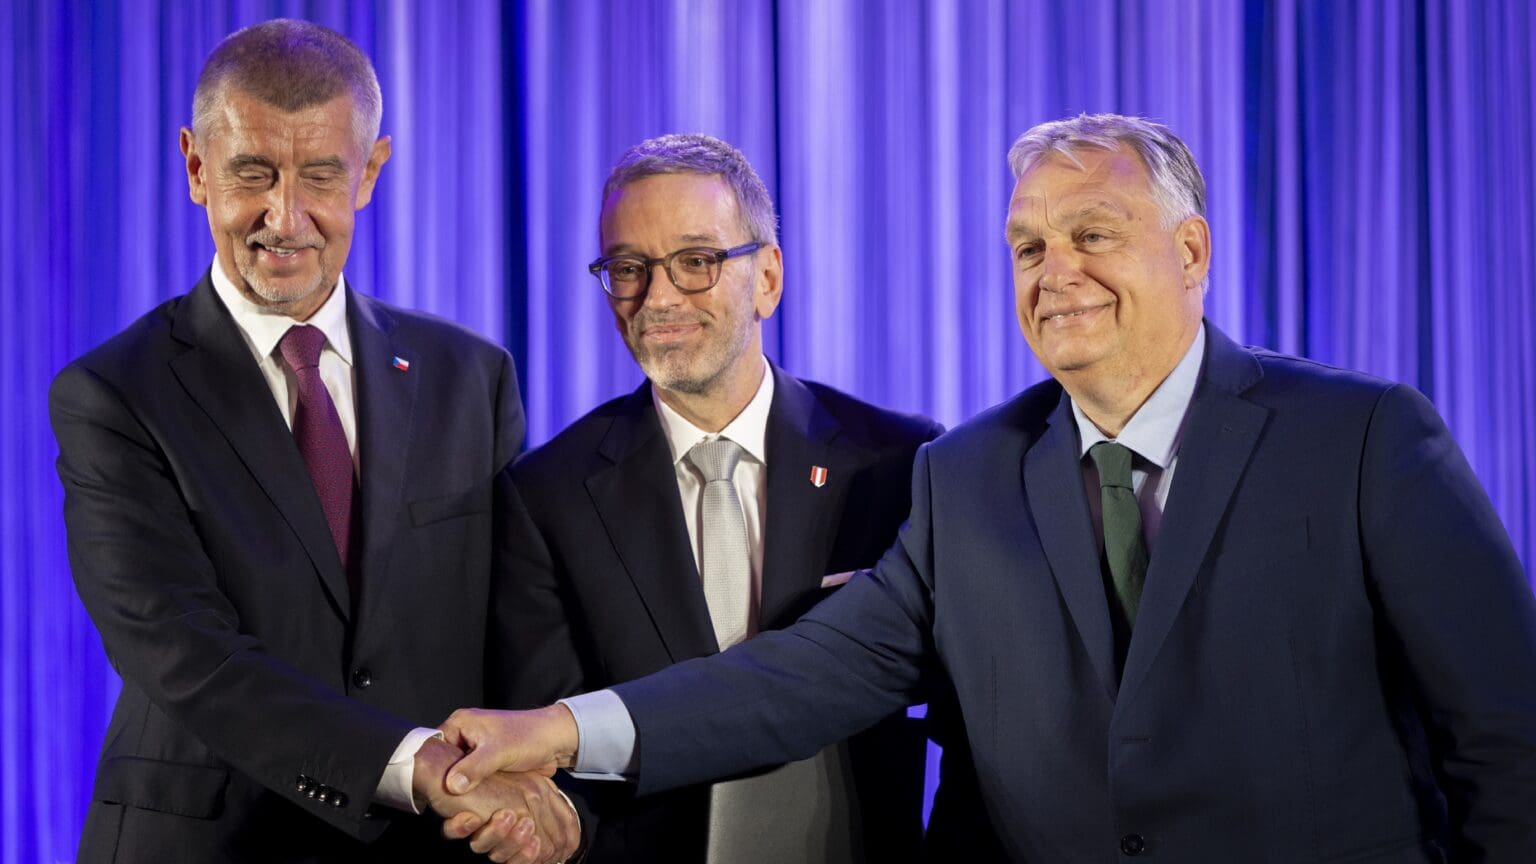 Orbán, Kickl, Babiš Announce New European Alliance in Vienna